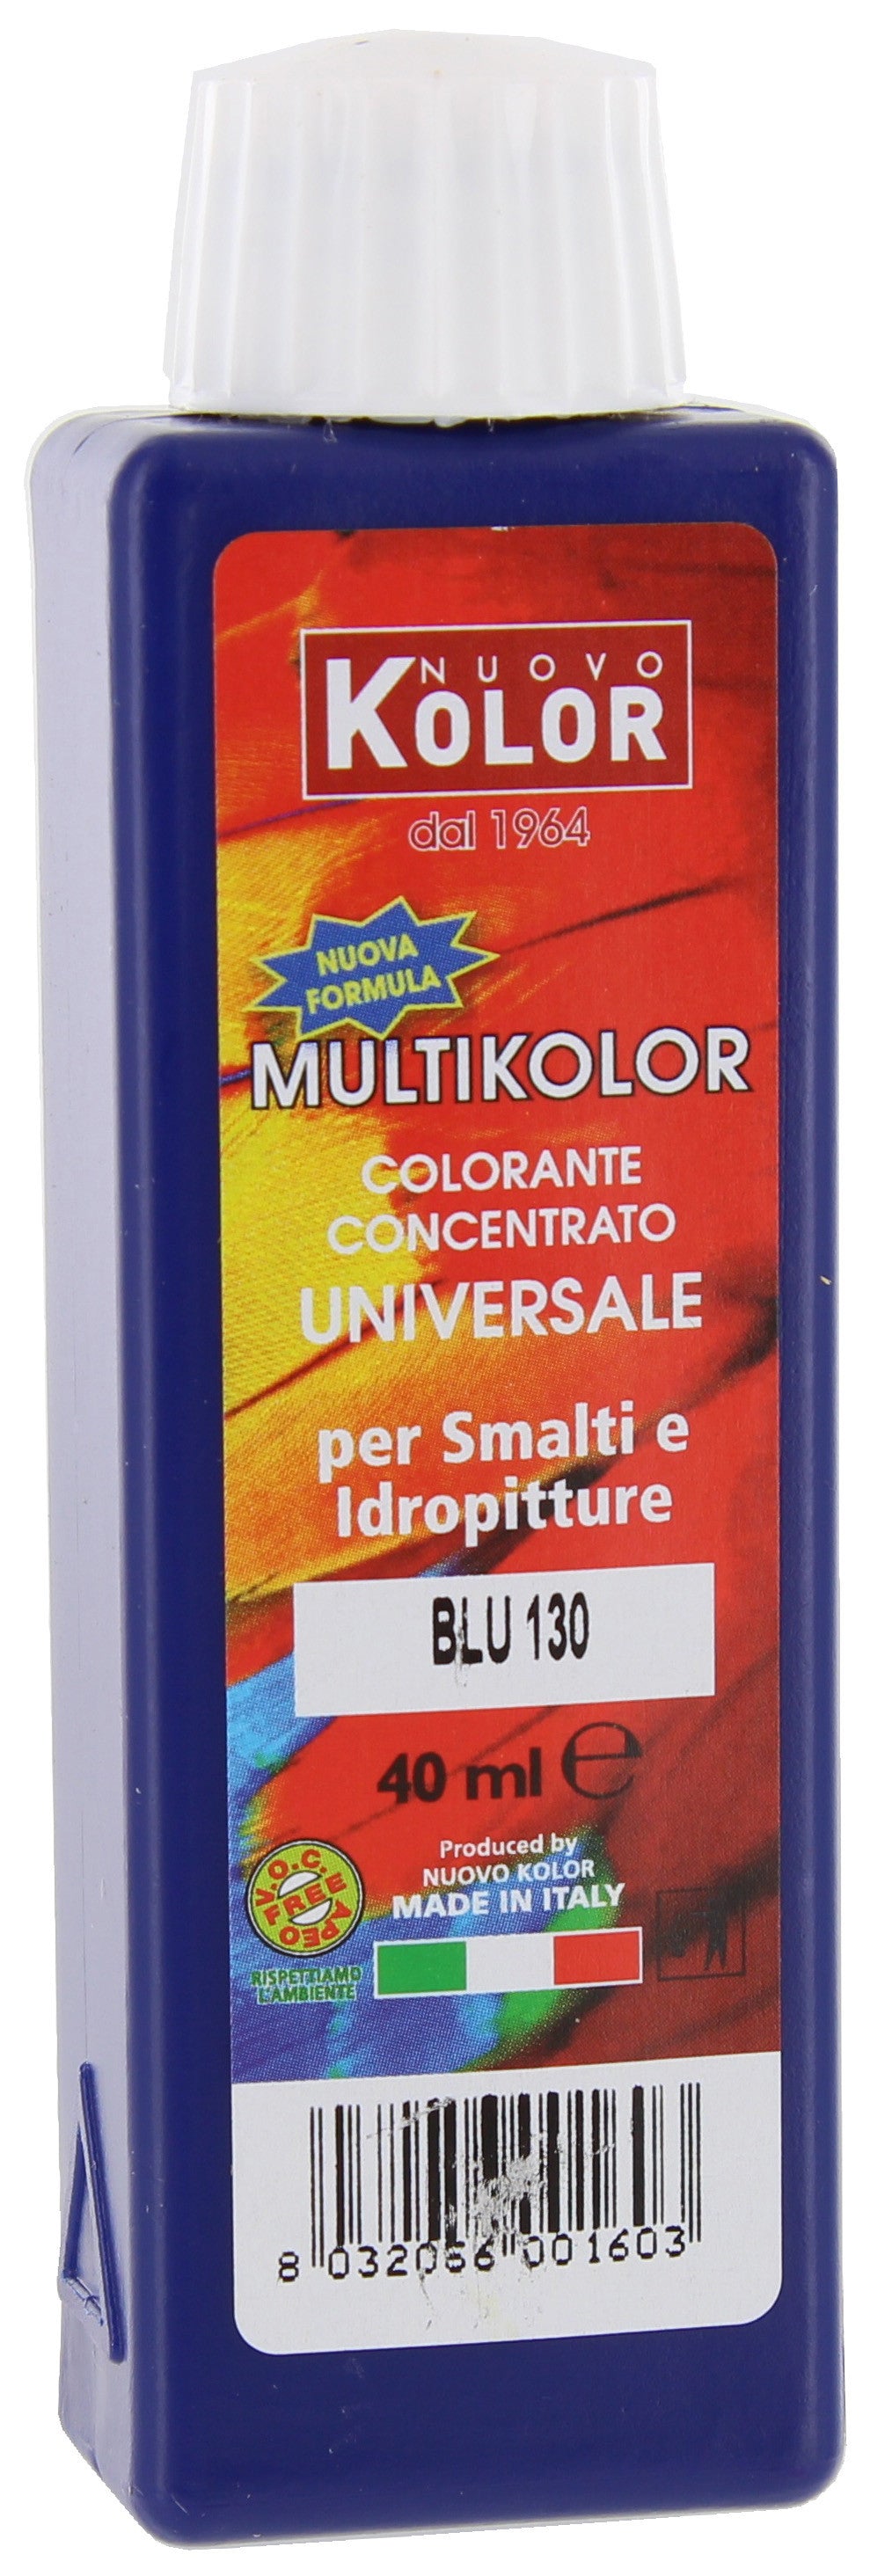 Colorante universale ml.40 bleu         130rl